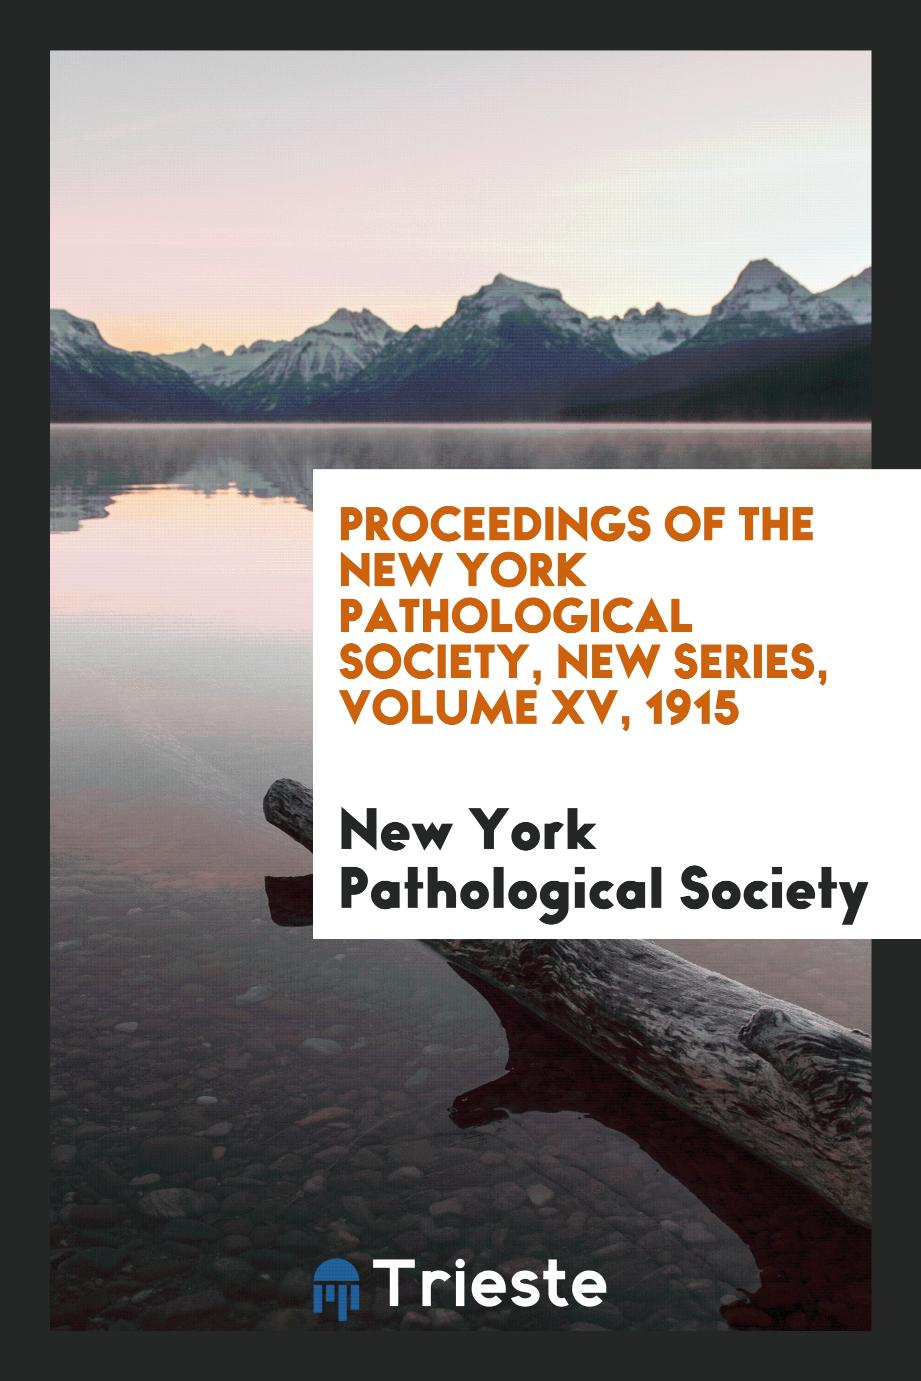 Proceedings of the New York Pathological Society, New Series, Volume XV, 1915